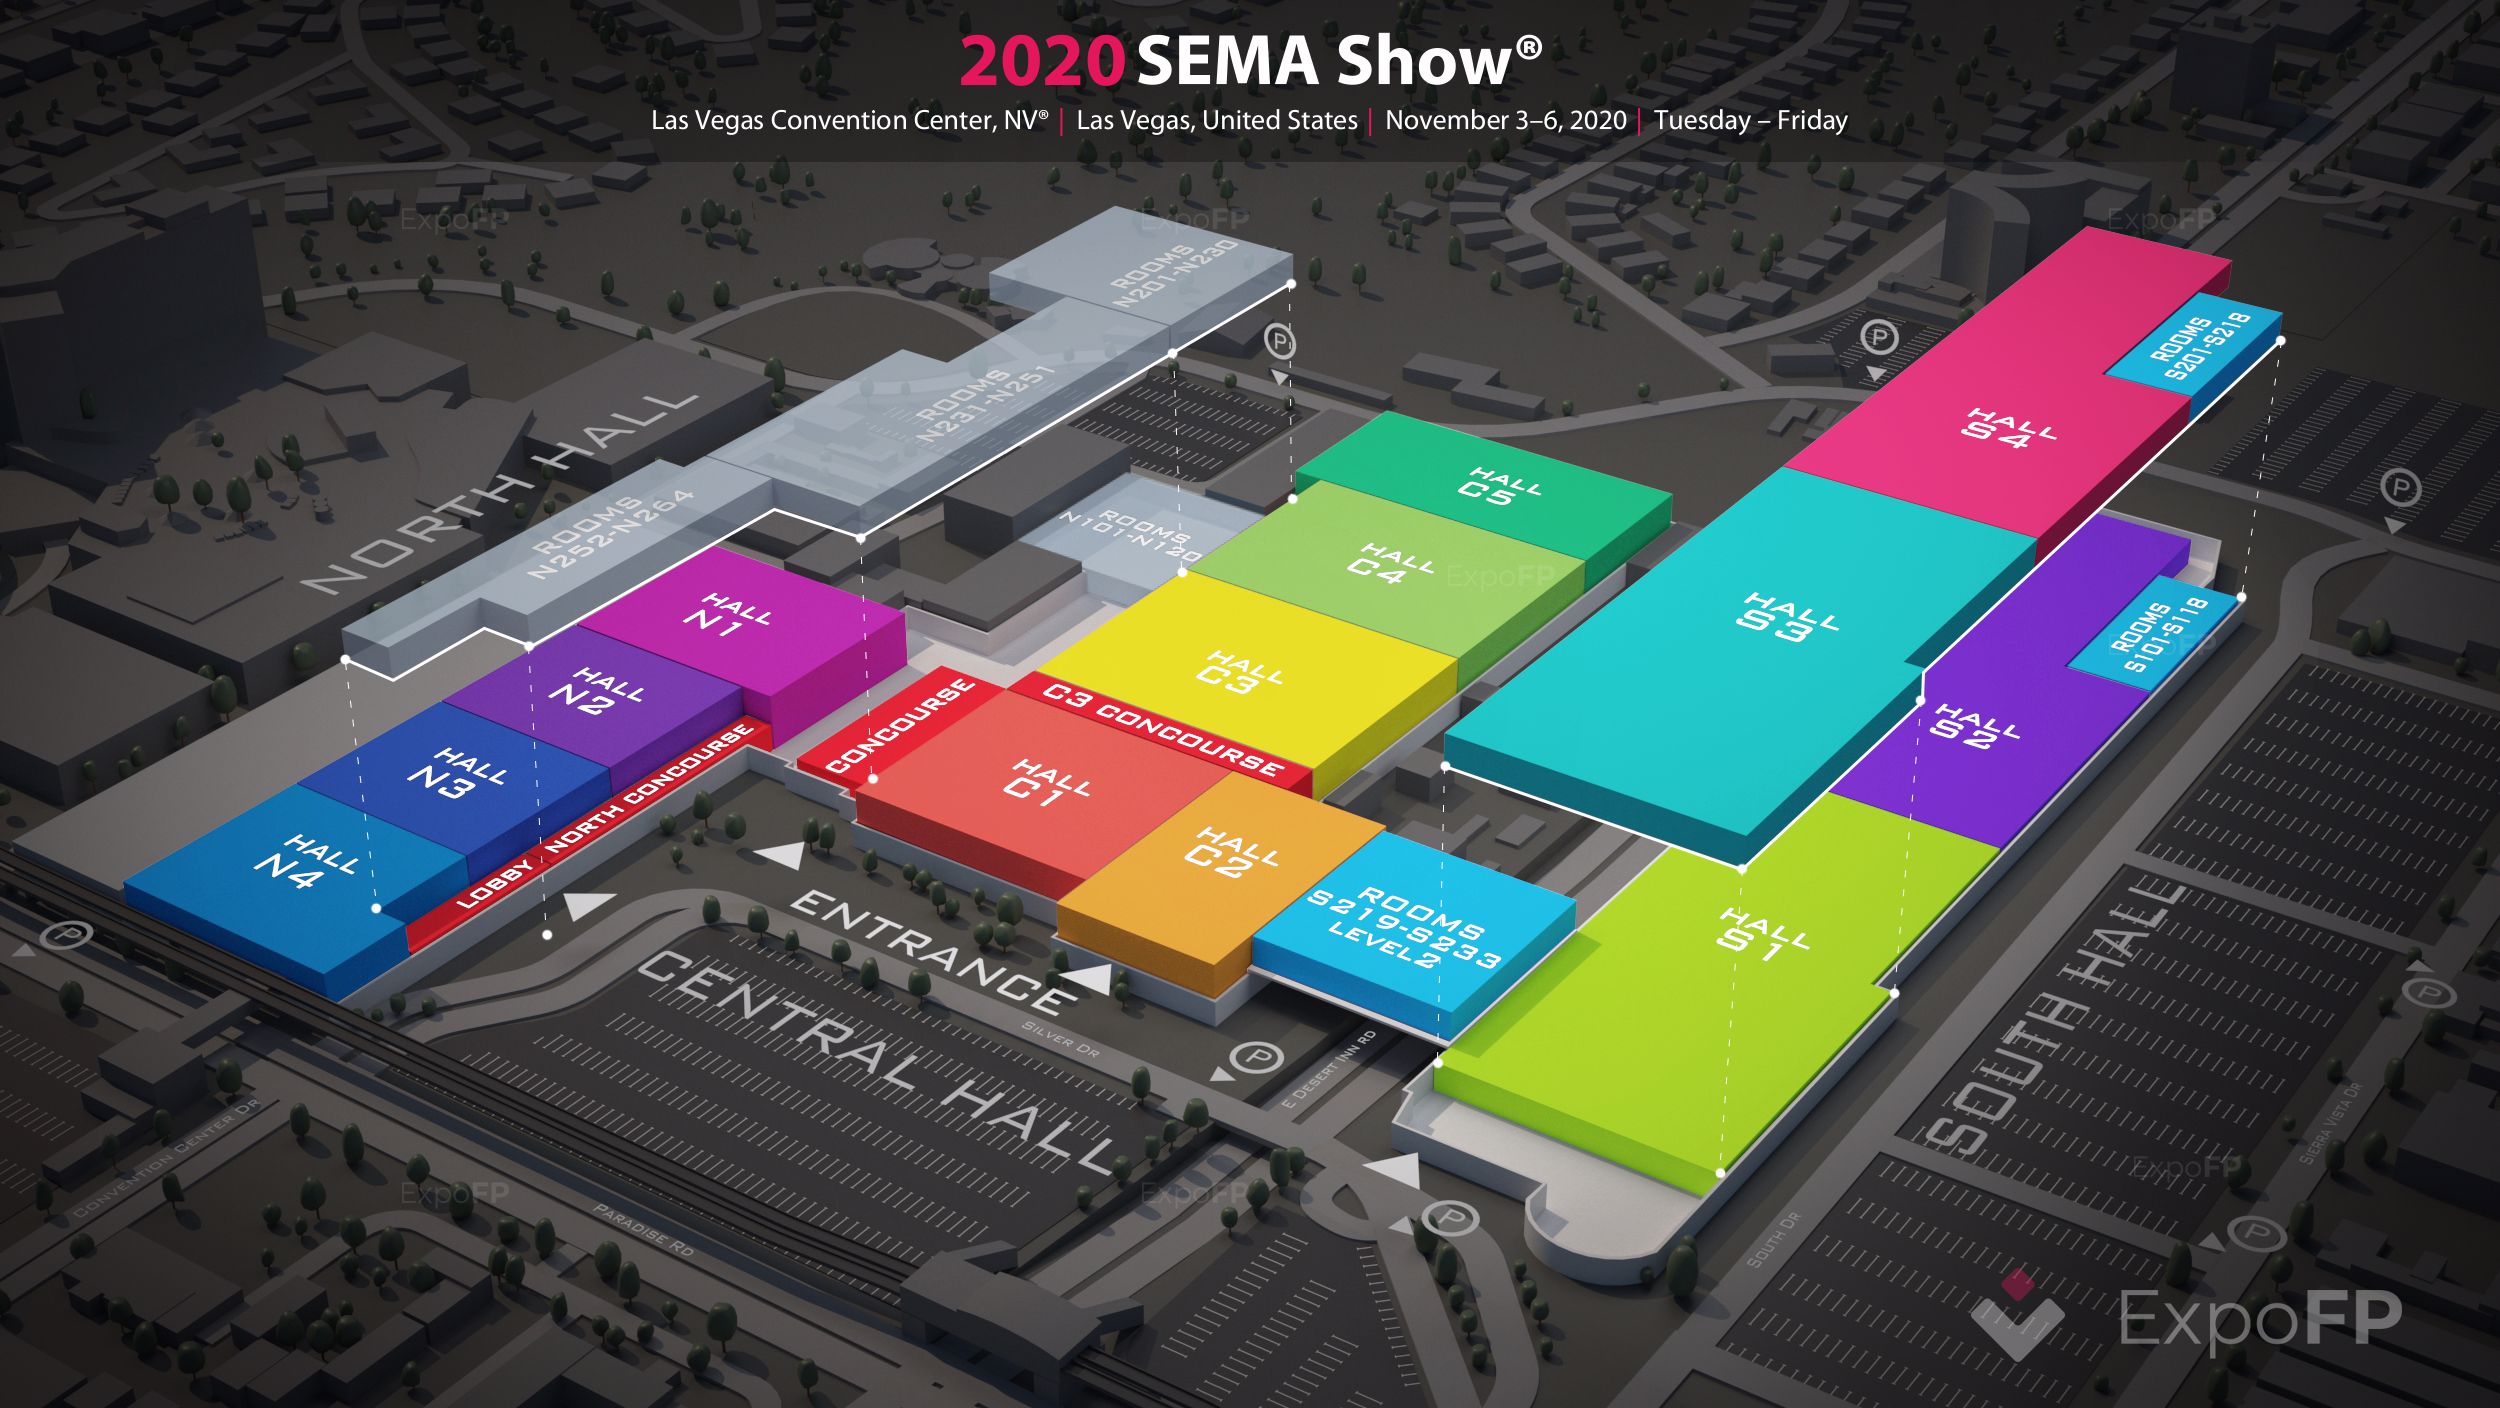 SEMA Show 2020 in Las Vegas Convention Center, NV